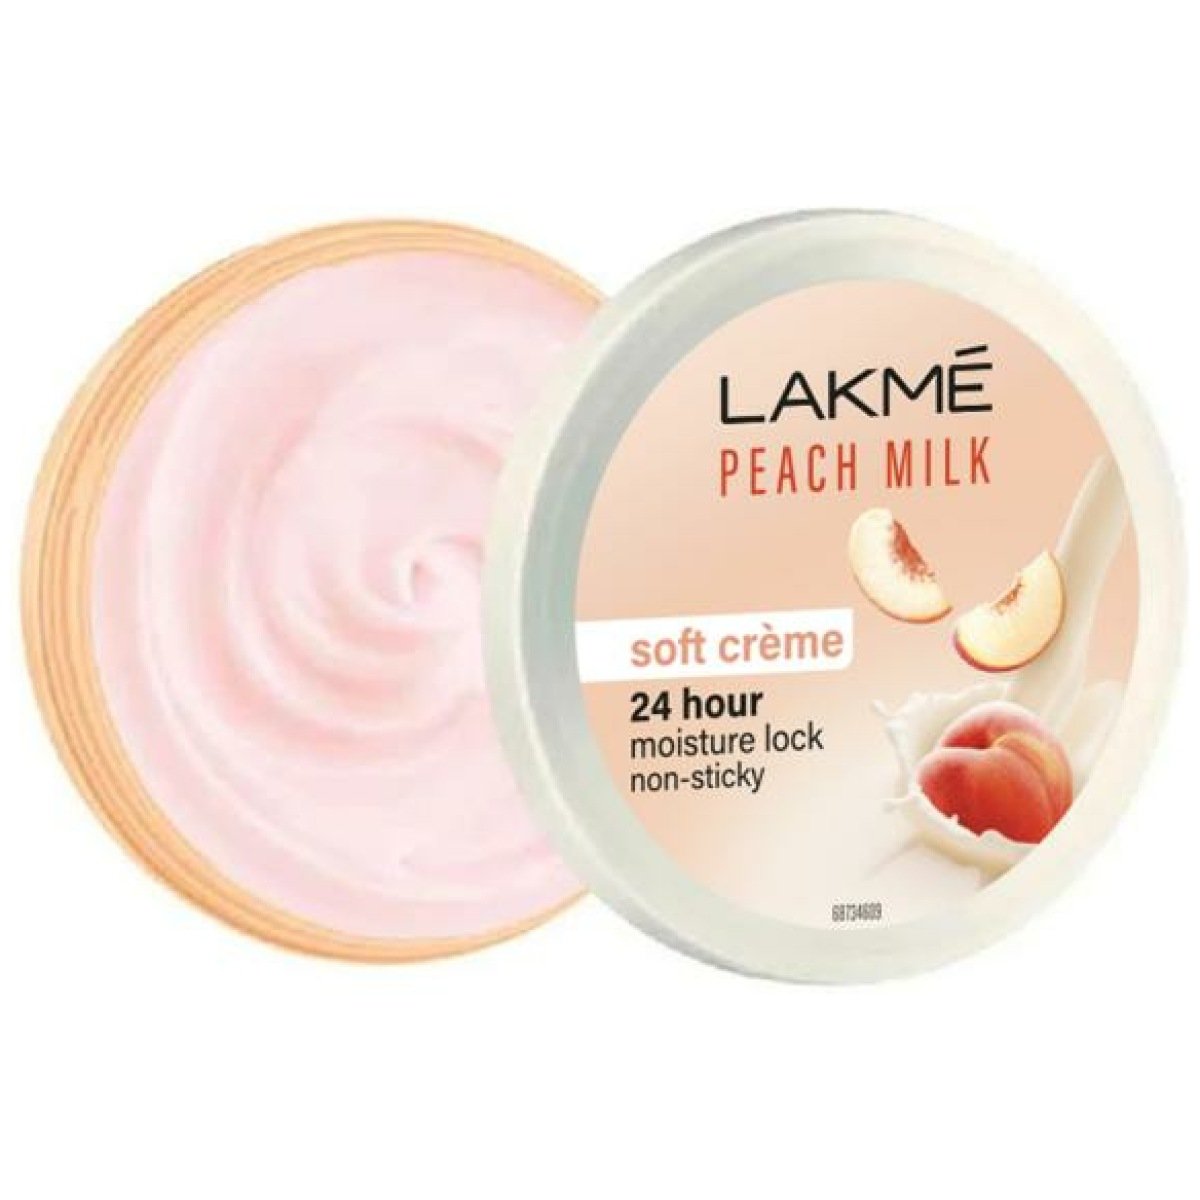 Lakme Peach Milk Soft Creme, 250 g